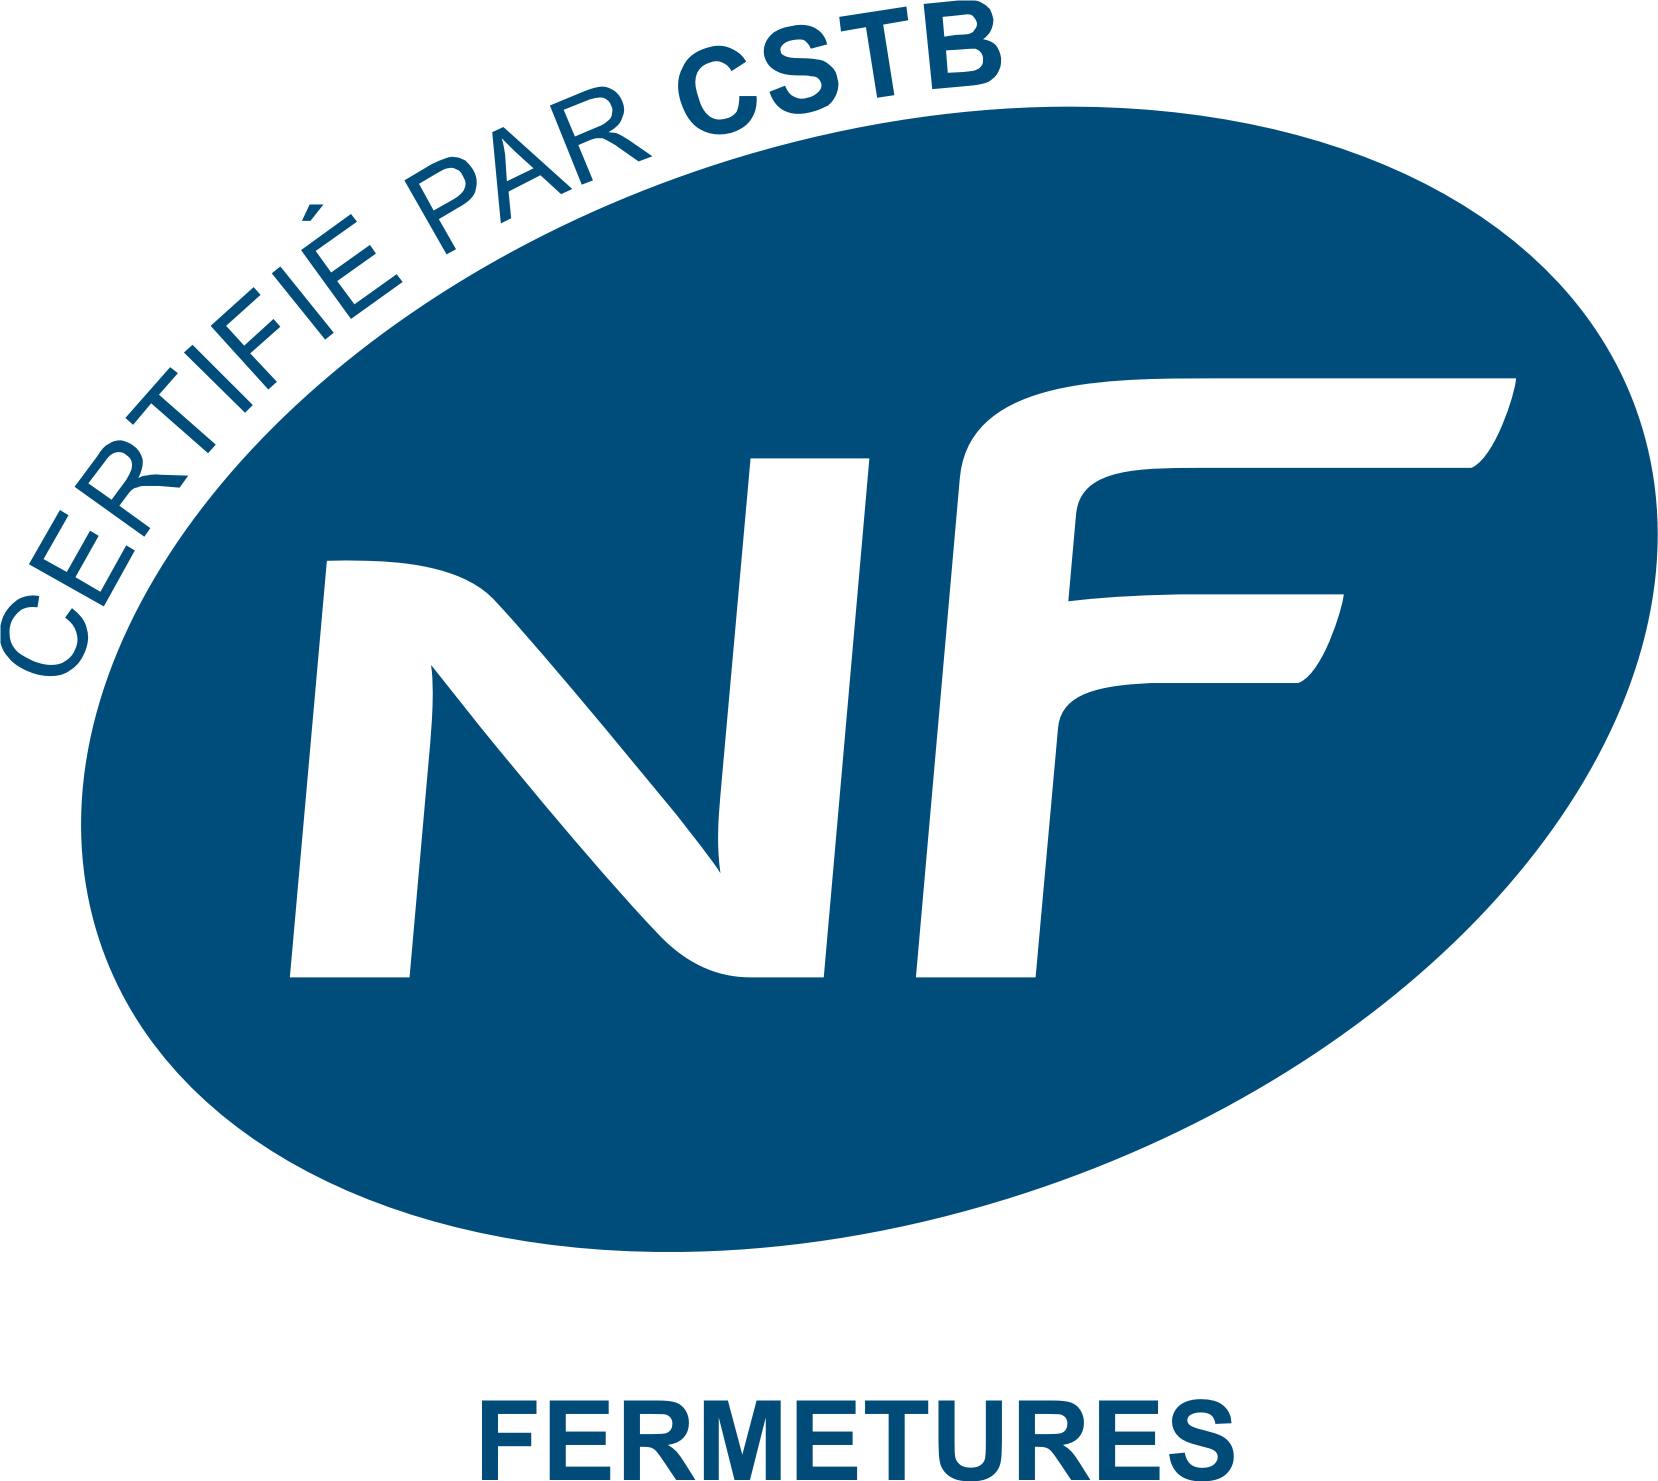 2011 NF CSTB FERMETURES